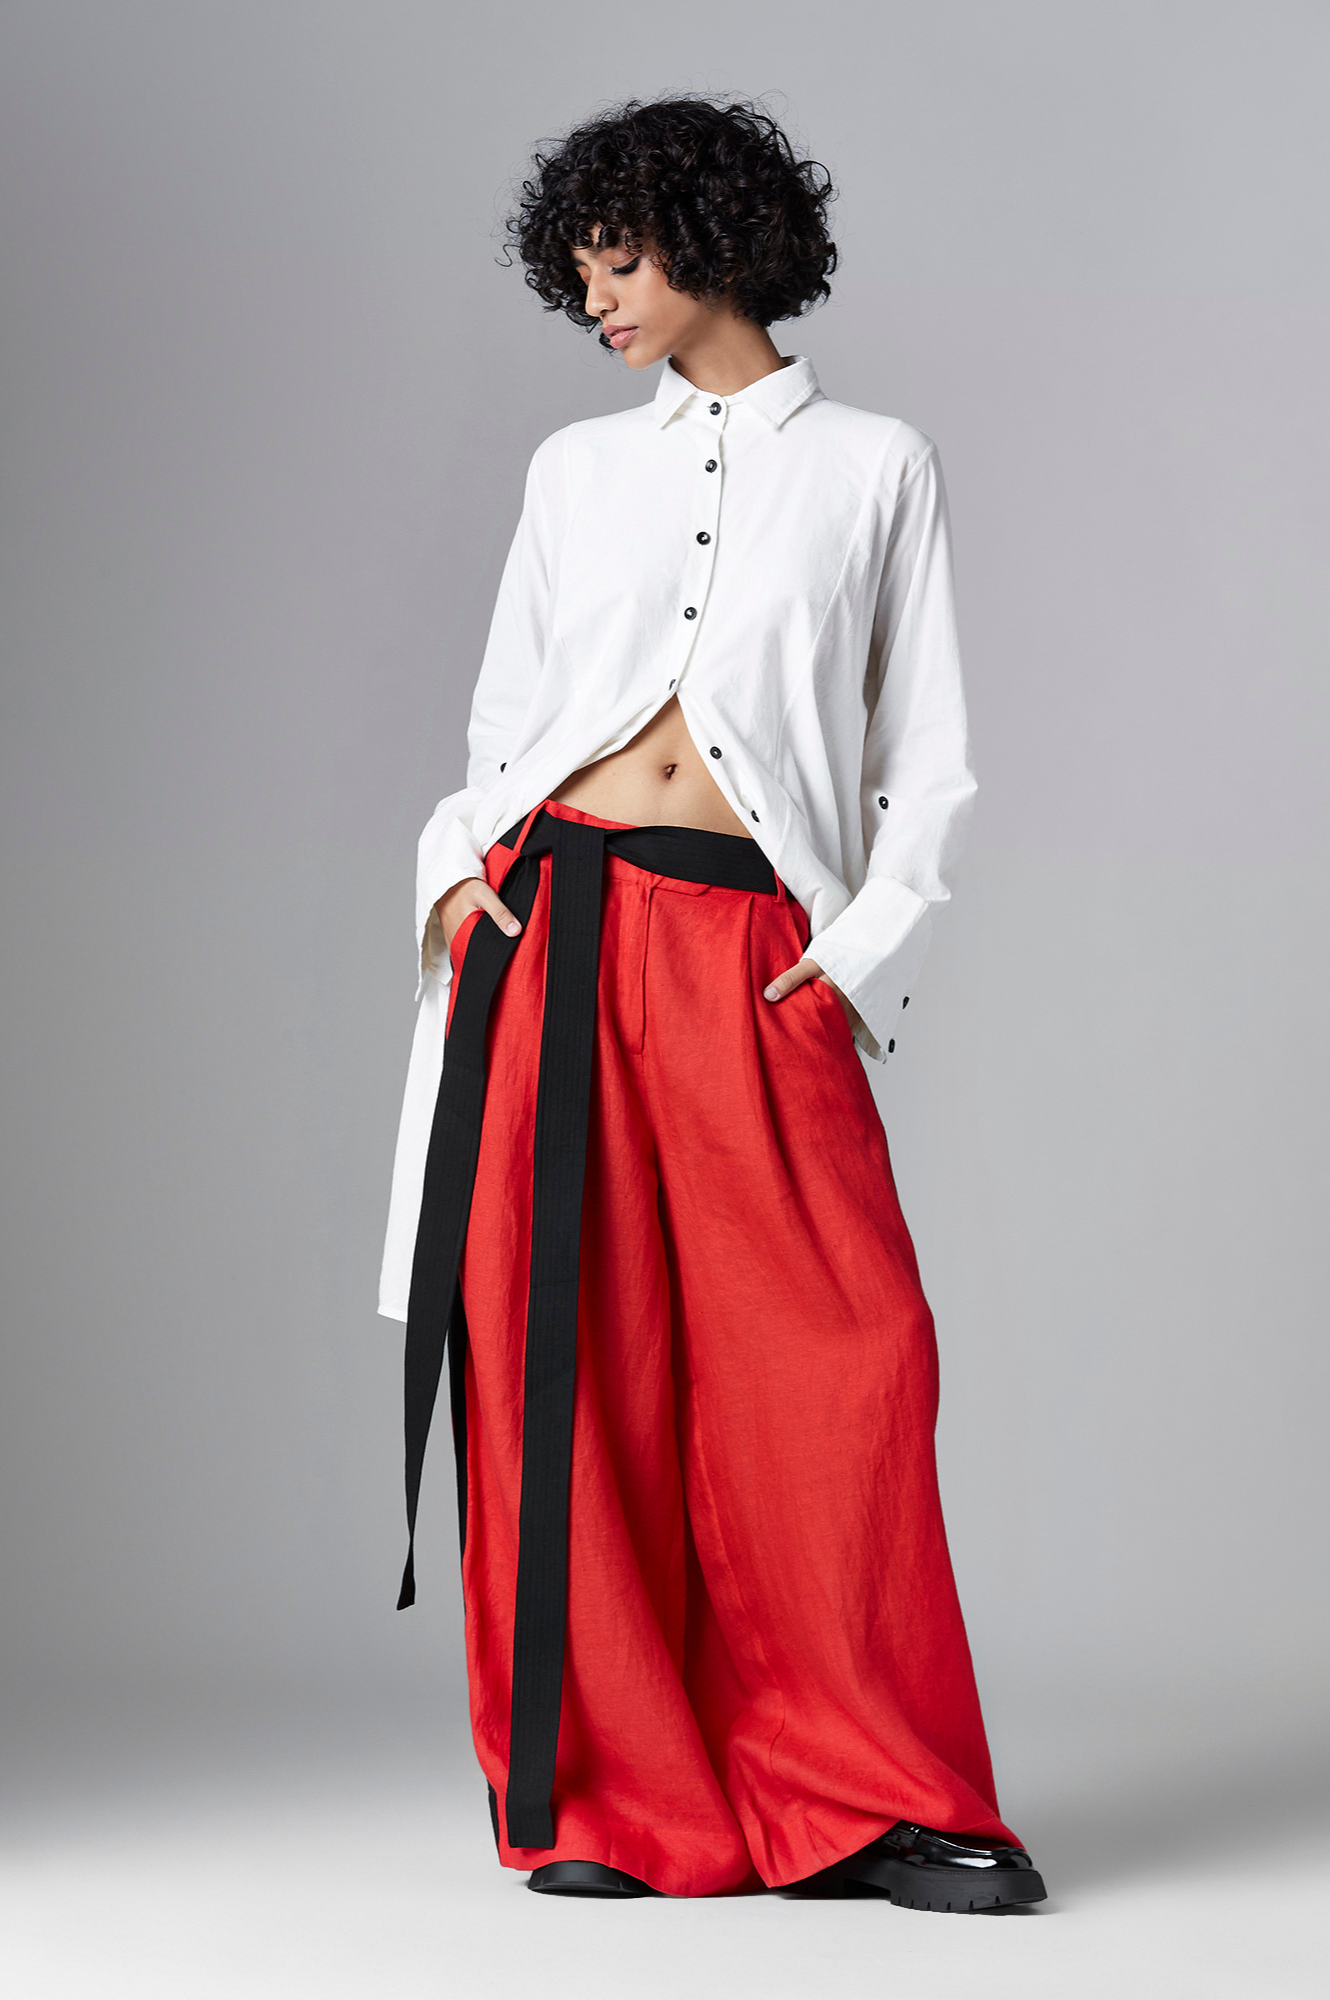 Hakama the Traditional Japanese Trousers  YABAI  The Modern Vibrant  Face of Japan